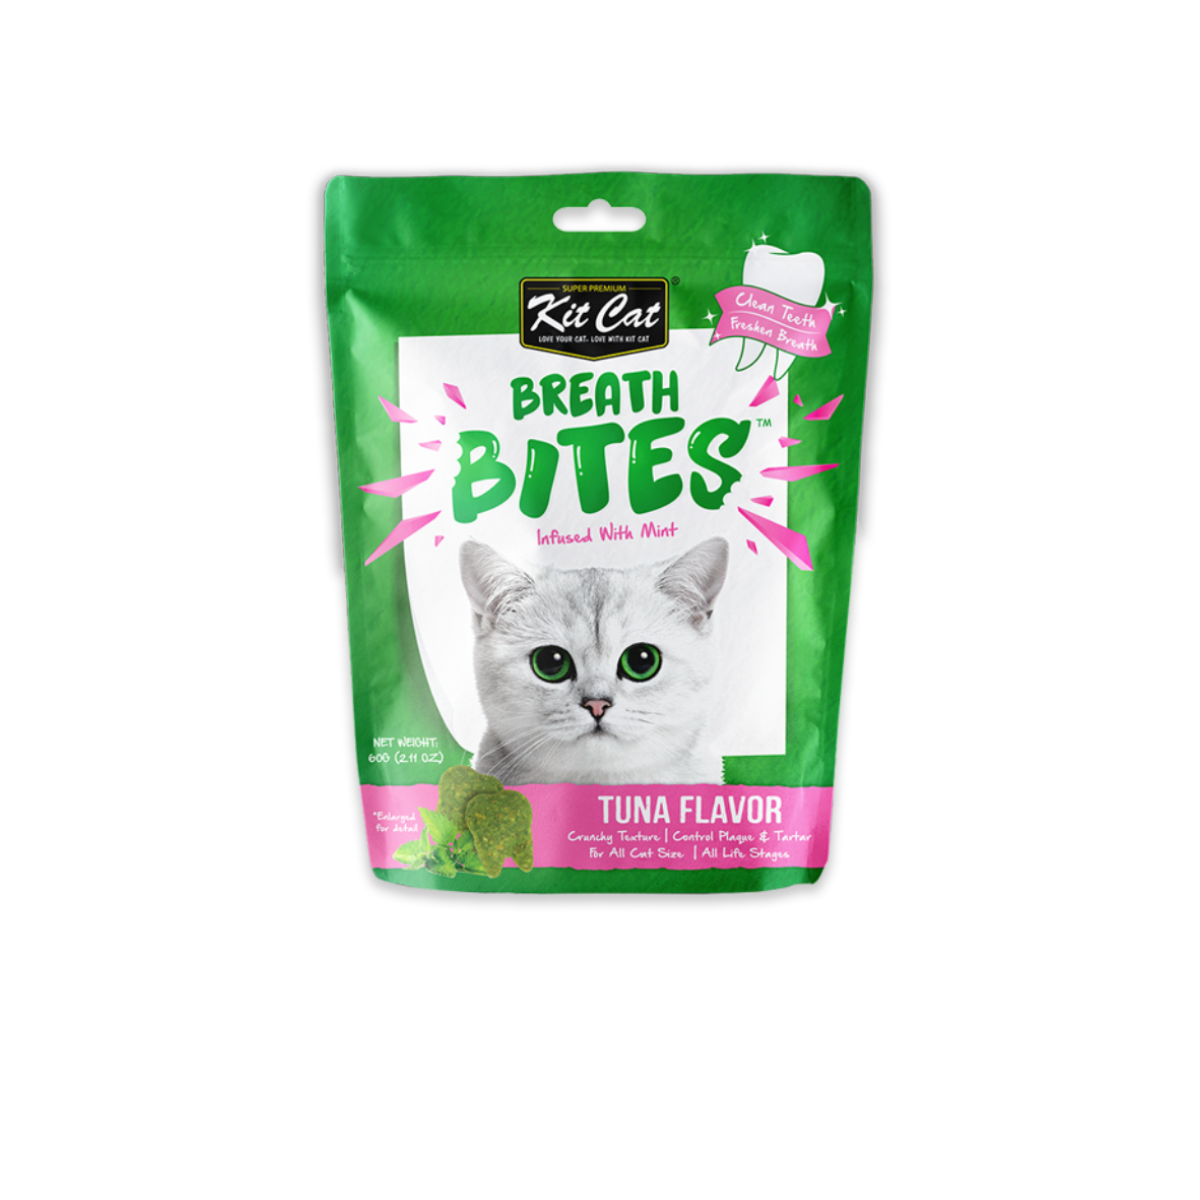 Kit Cat Breath Bites Infused with Mint Tuna Flavor คิทแคท เบรทไบรท์ ขนมขัดฟันแมว รสทูน่า ขนาด 60 กรัม